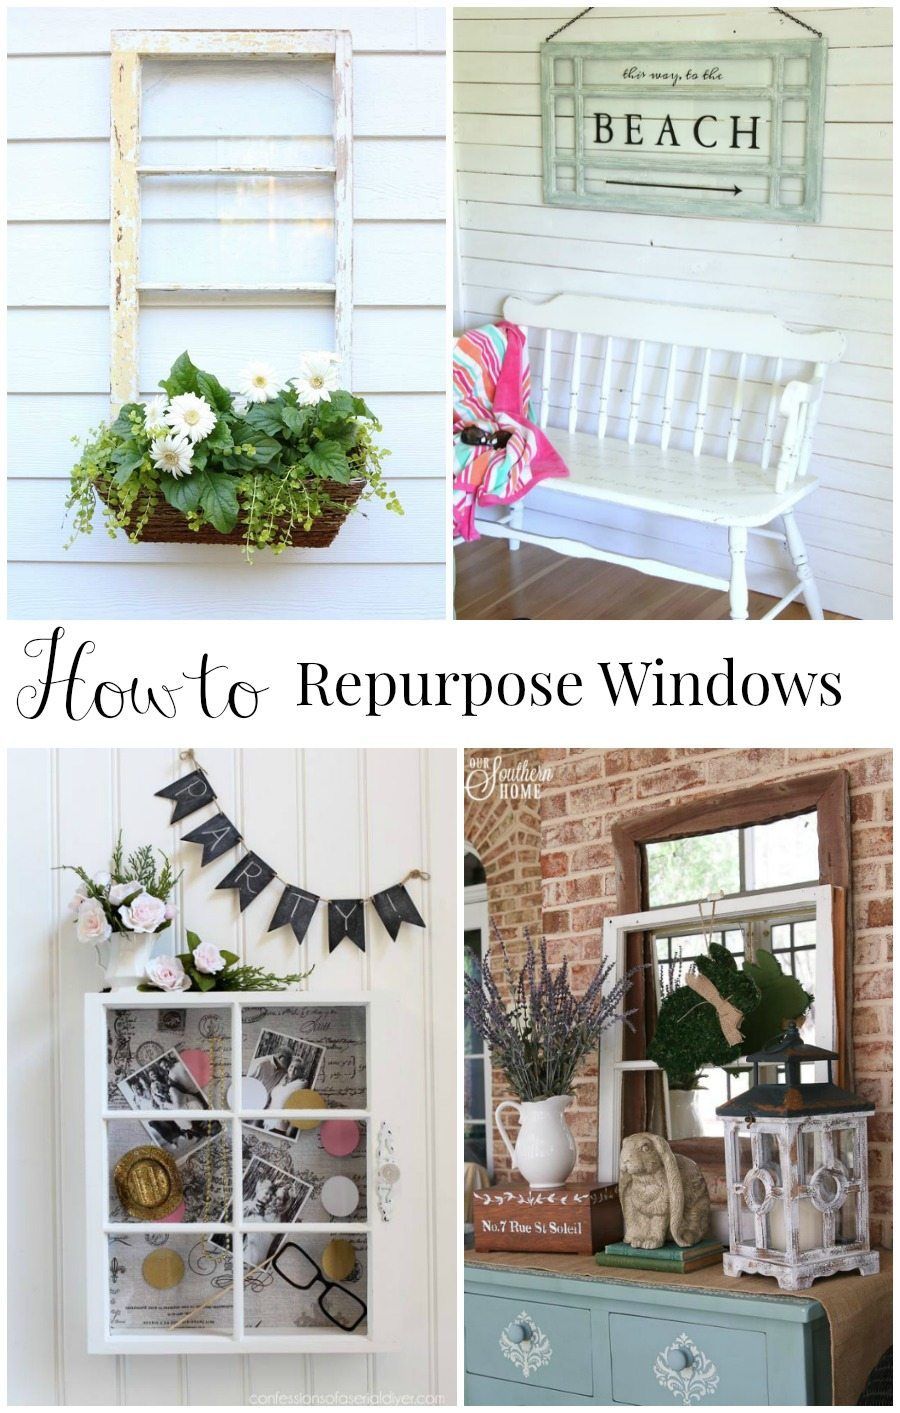 ow to repurpose old windows